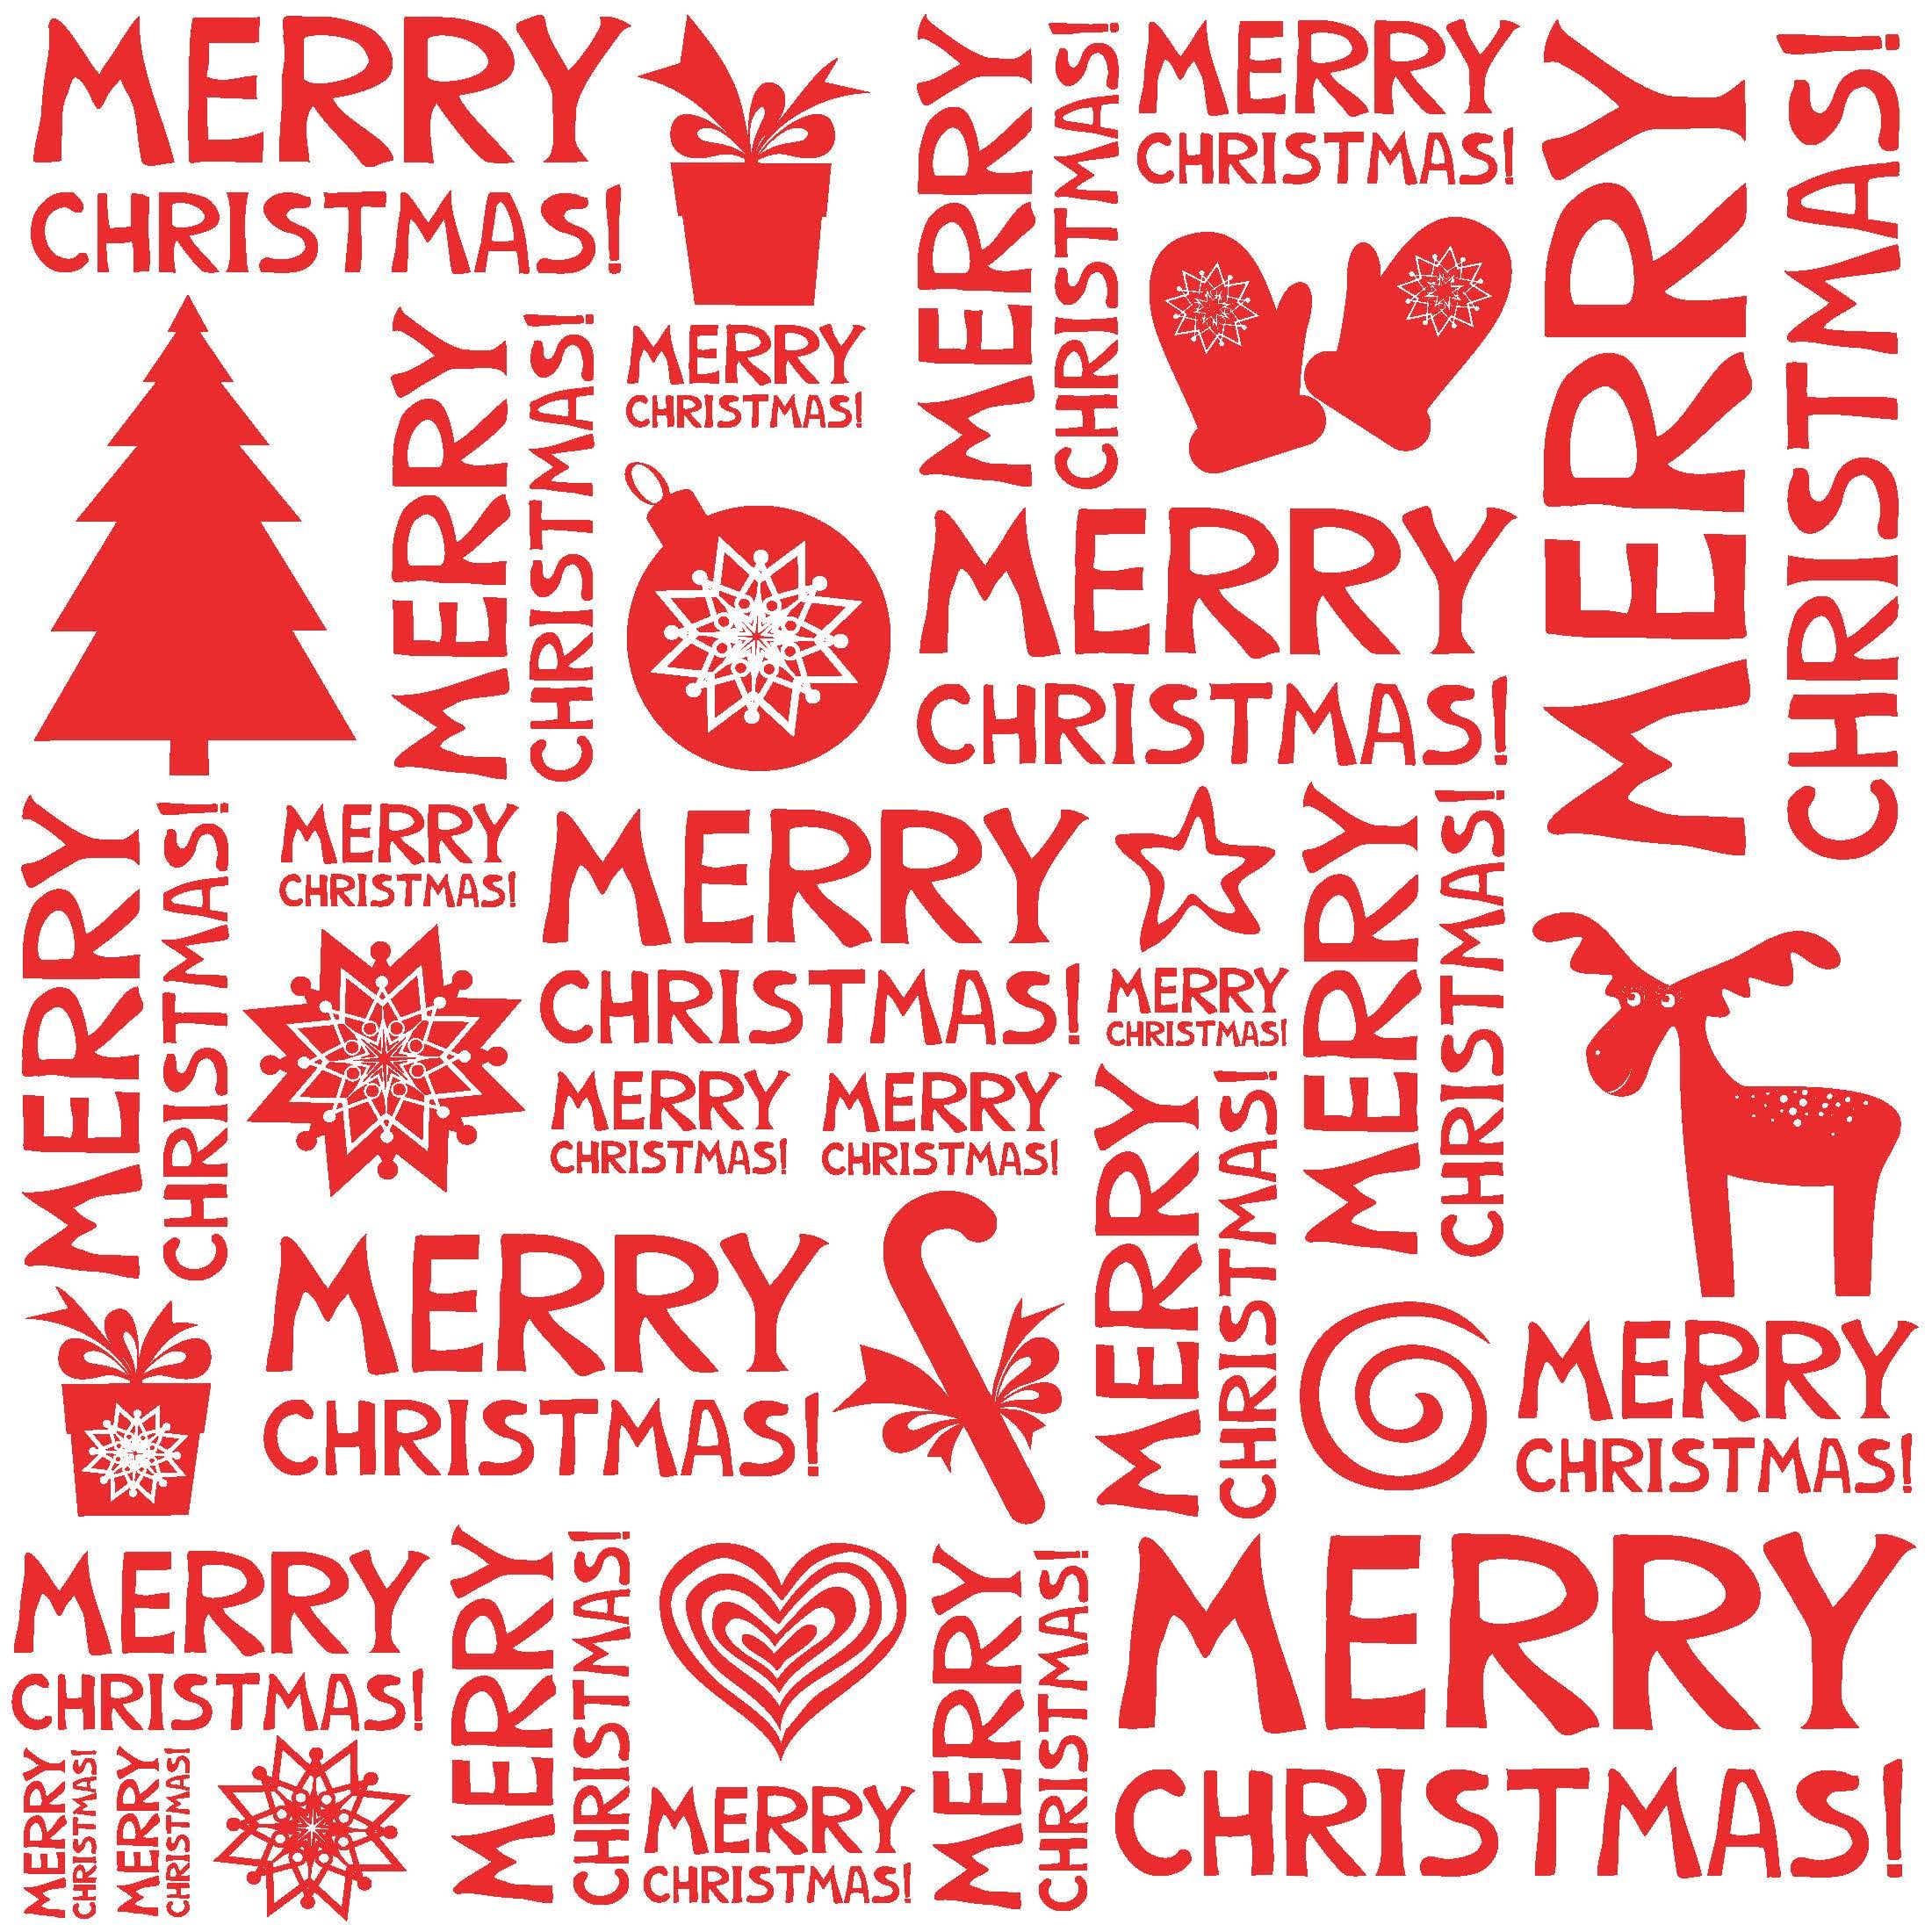 Merry Christmas. Merry christmas wallpaper, Christmas pattern background, Christmas background